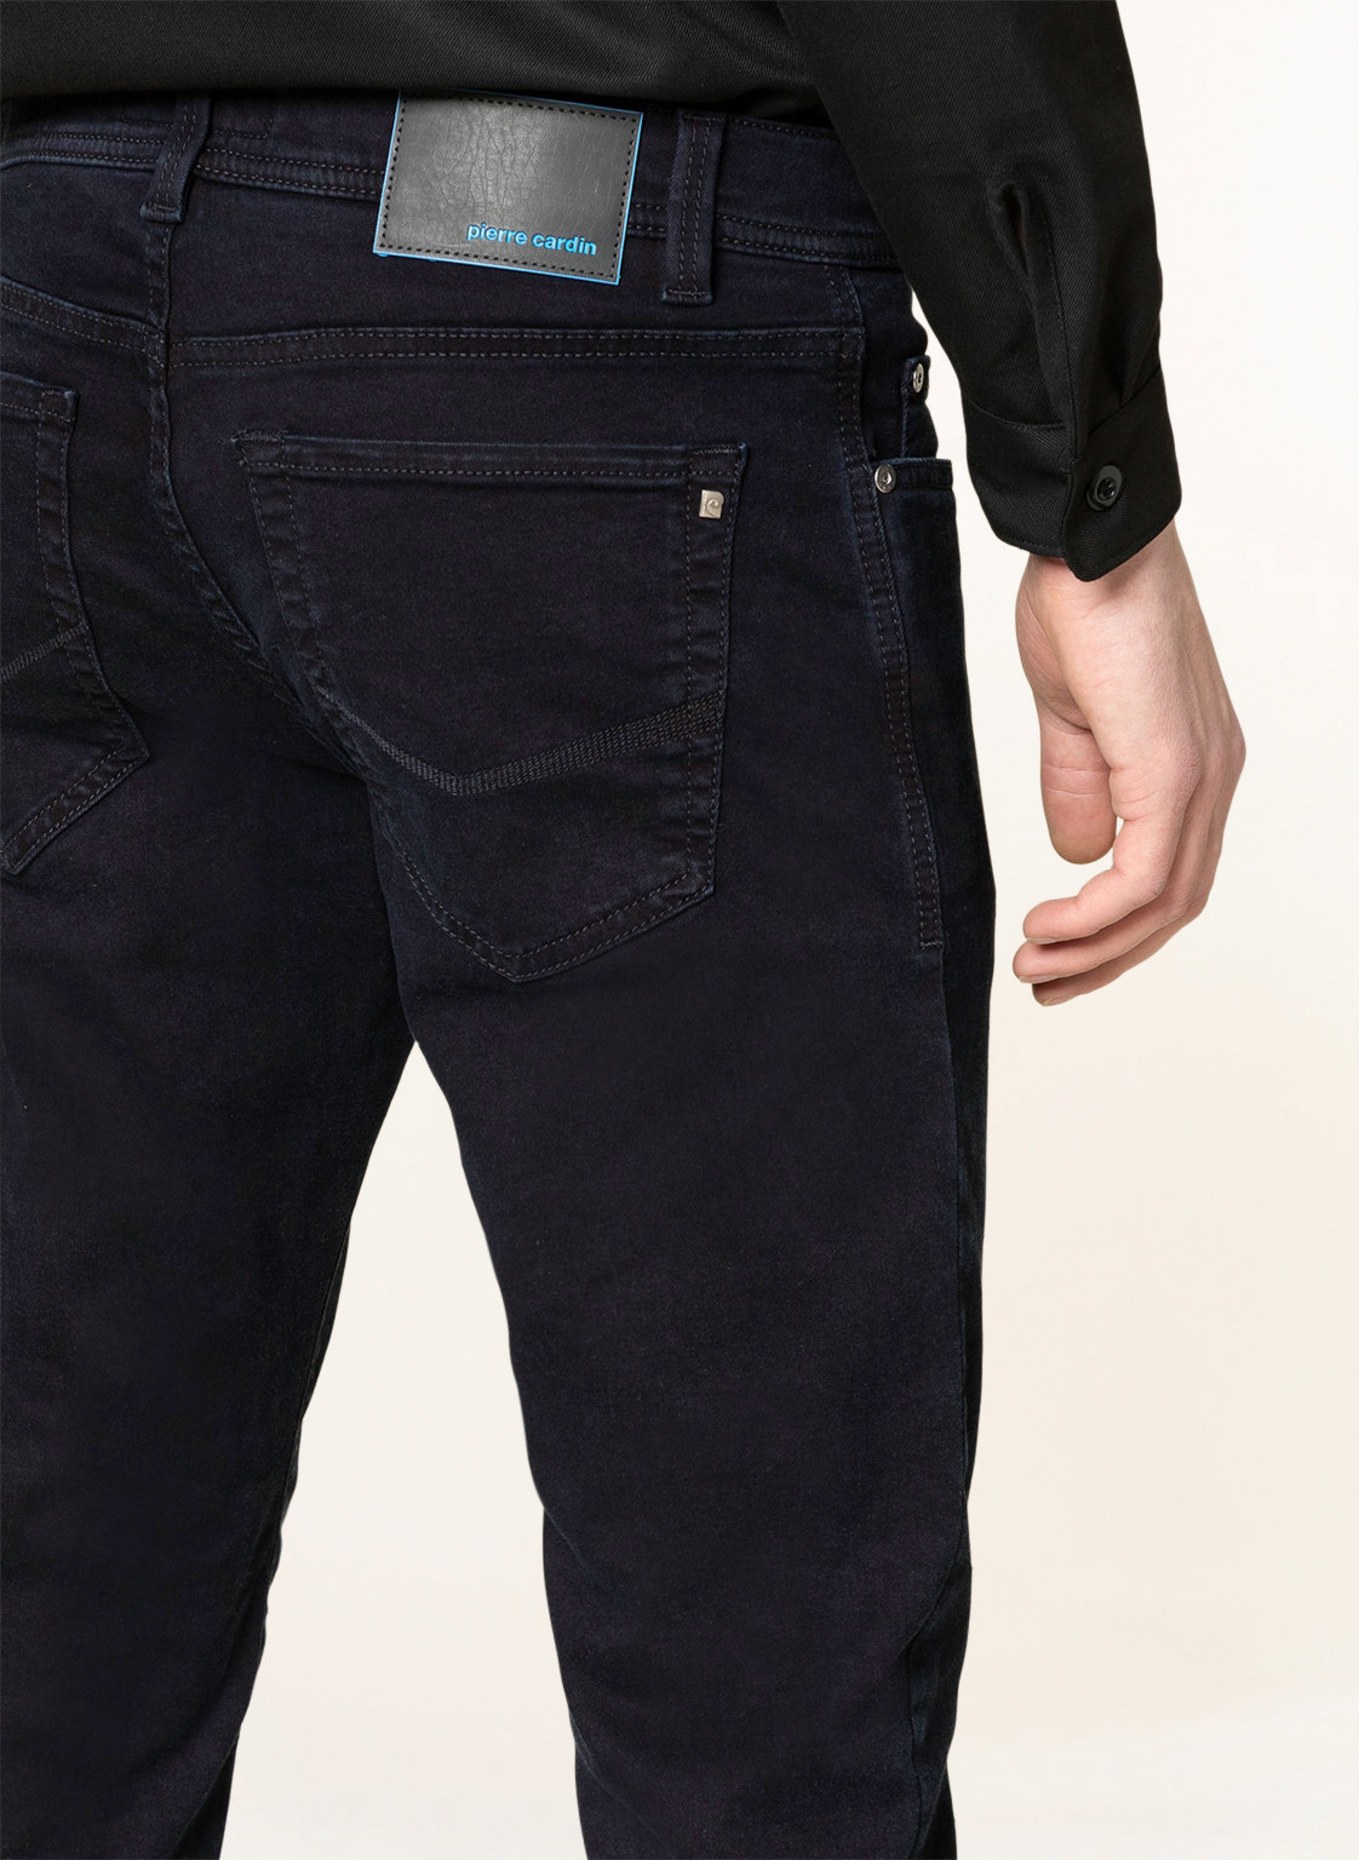 pierre cardin Jeans LYON FUTUREFLEX Tapered Fit , Farbe: 6802 blue/black used (Bild 5)